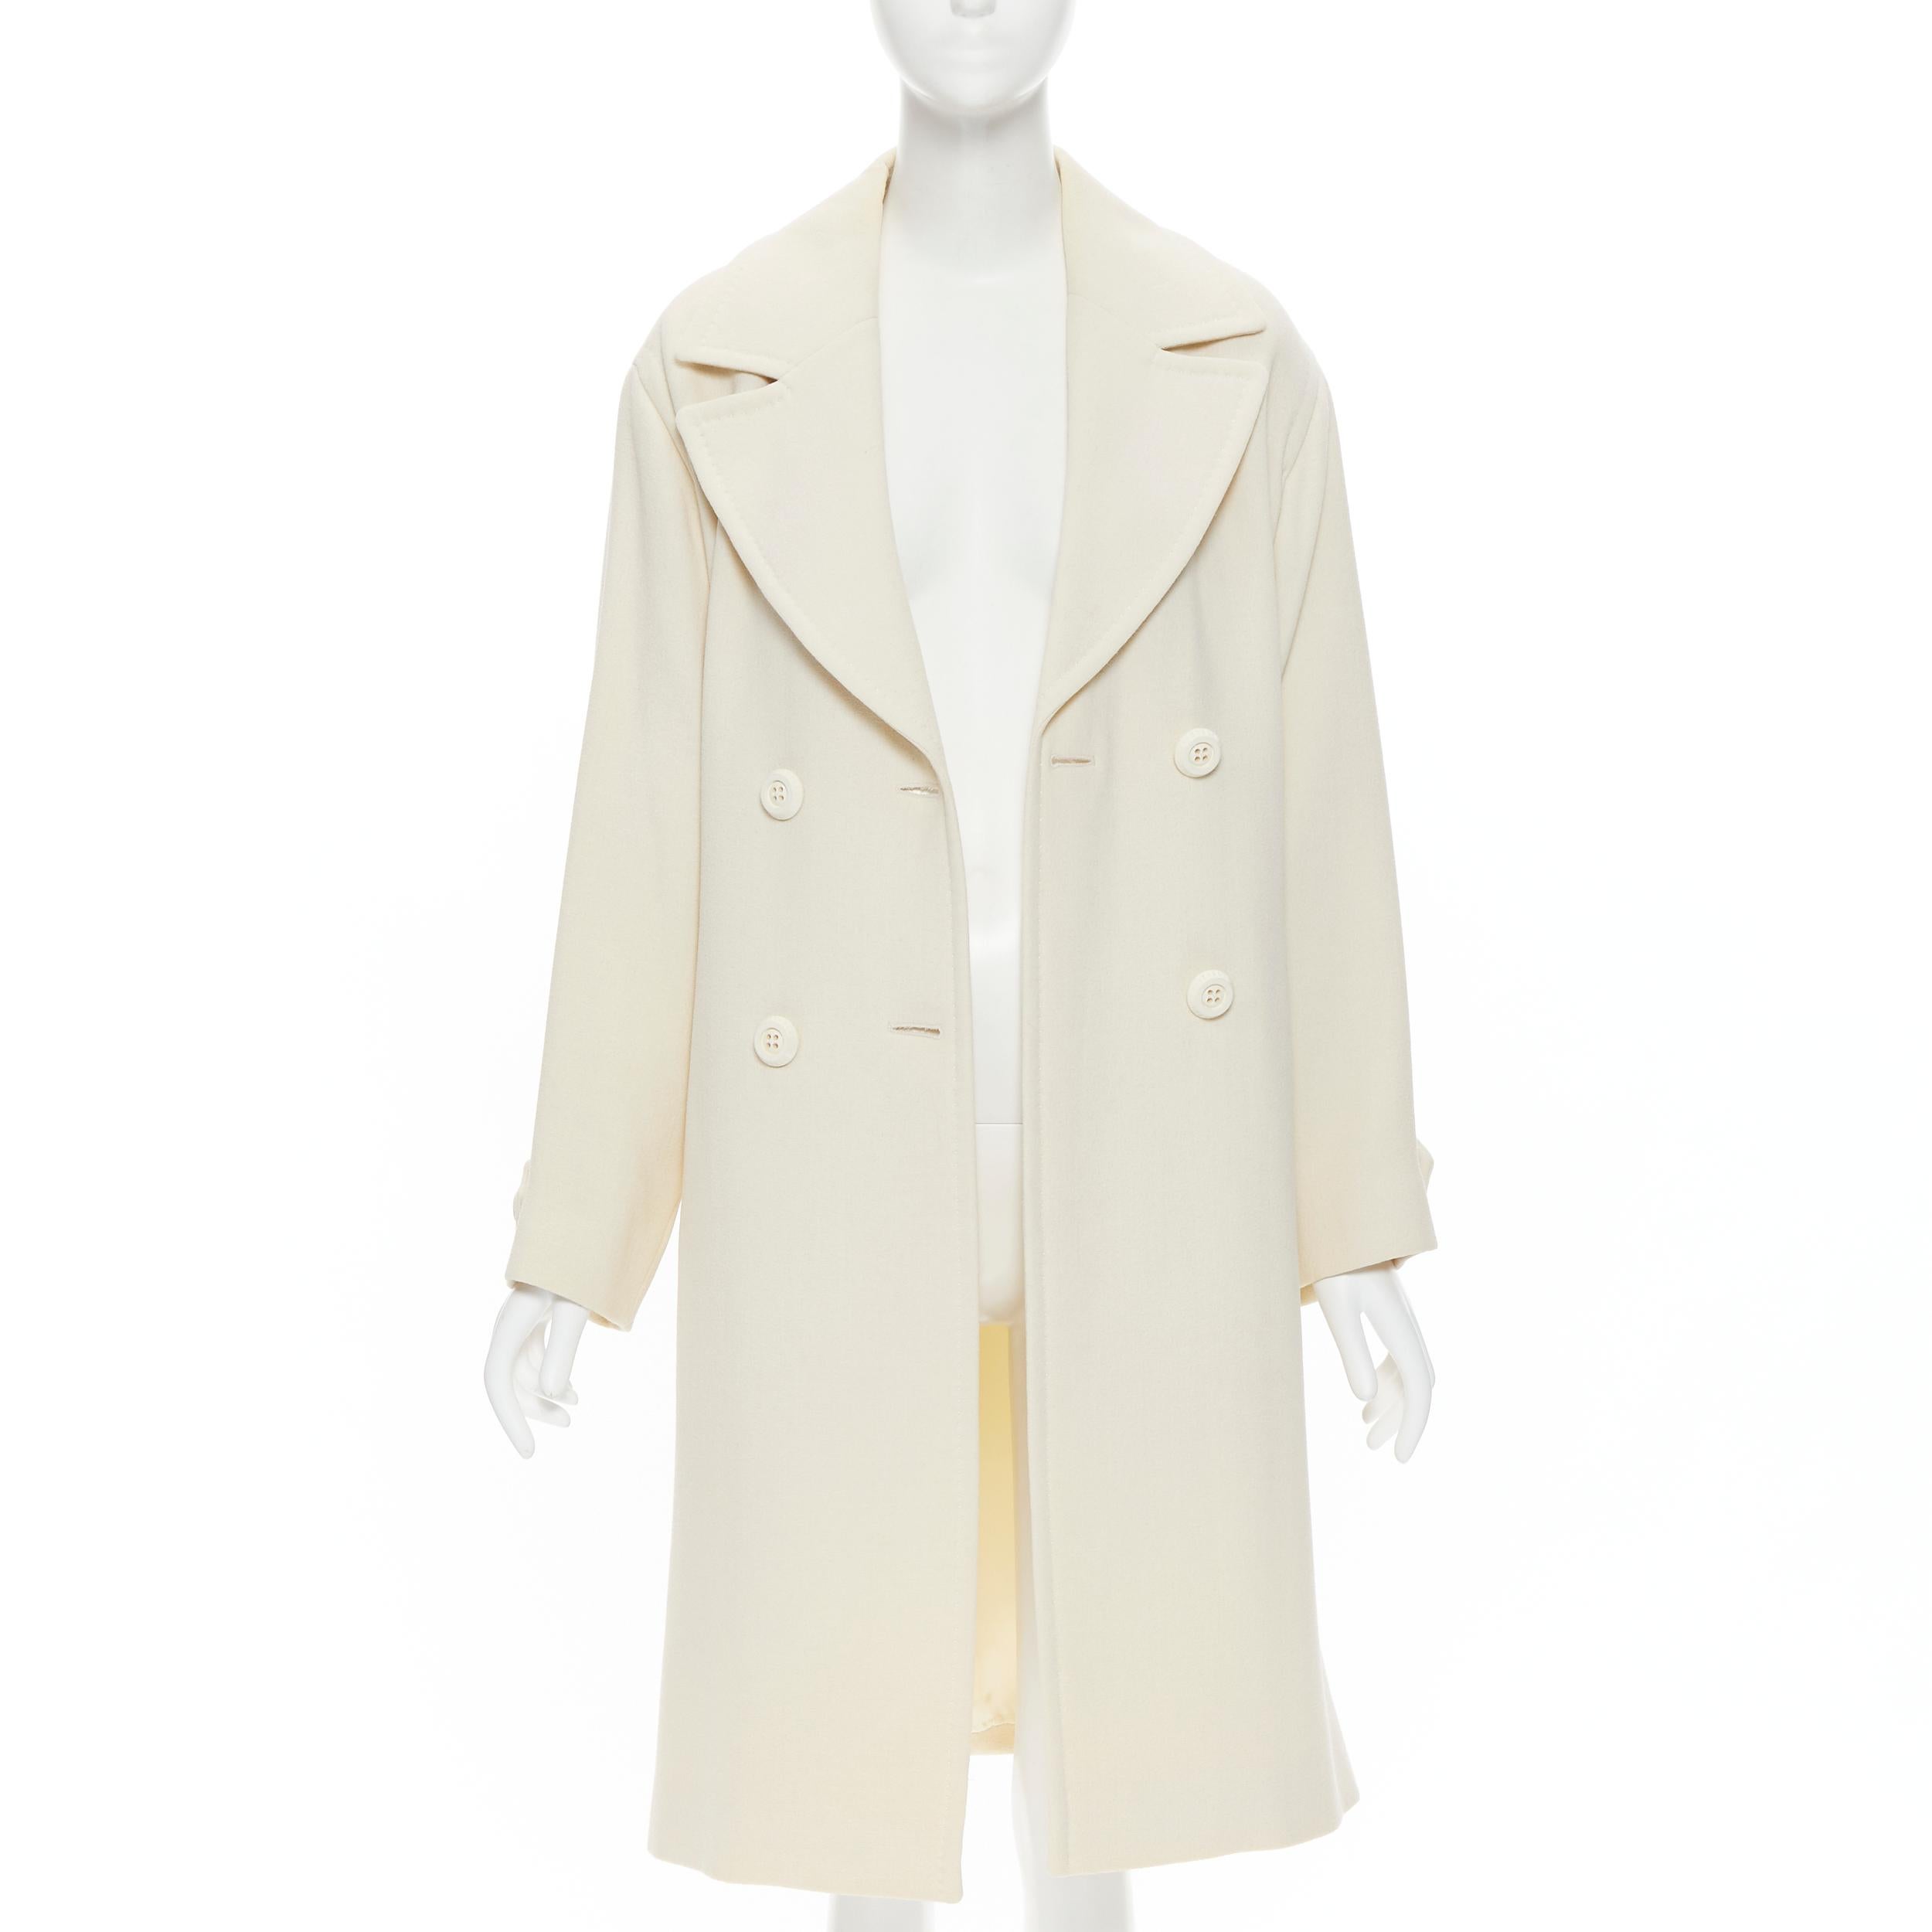 GIANFRANCO FERRE STUDIO ivory wool crepe double breasted coat jacket IT42 M 5